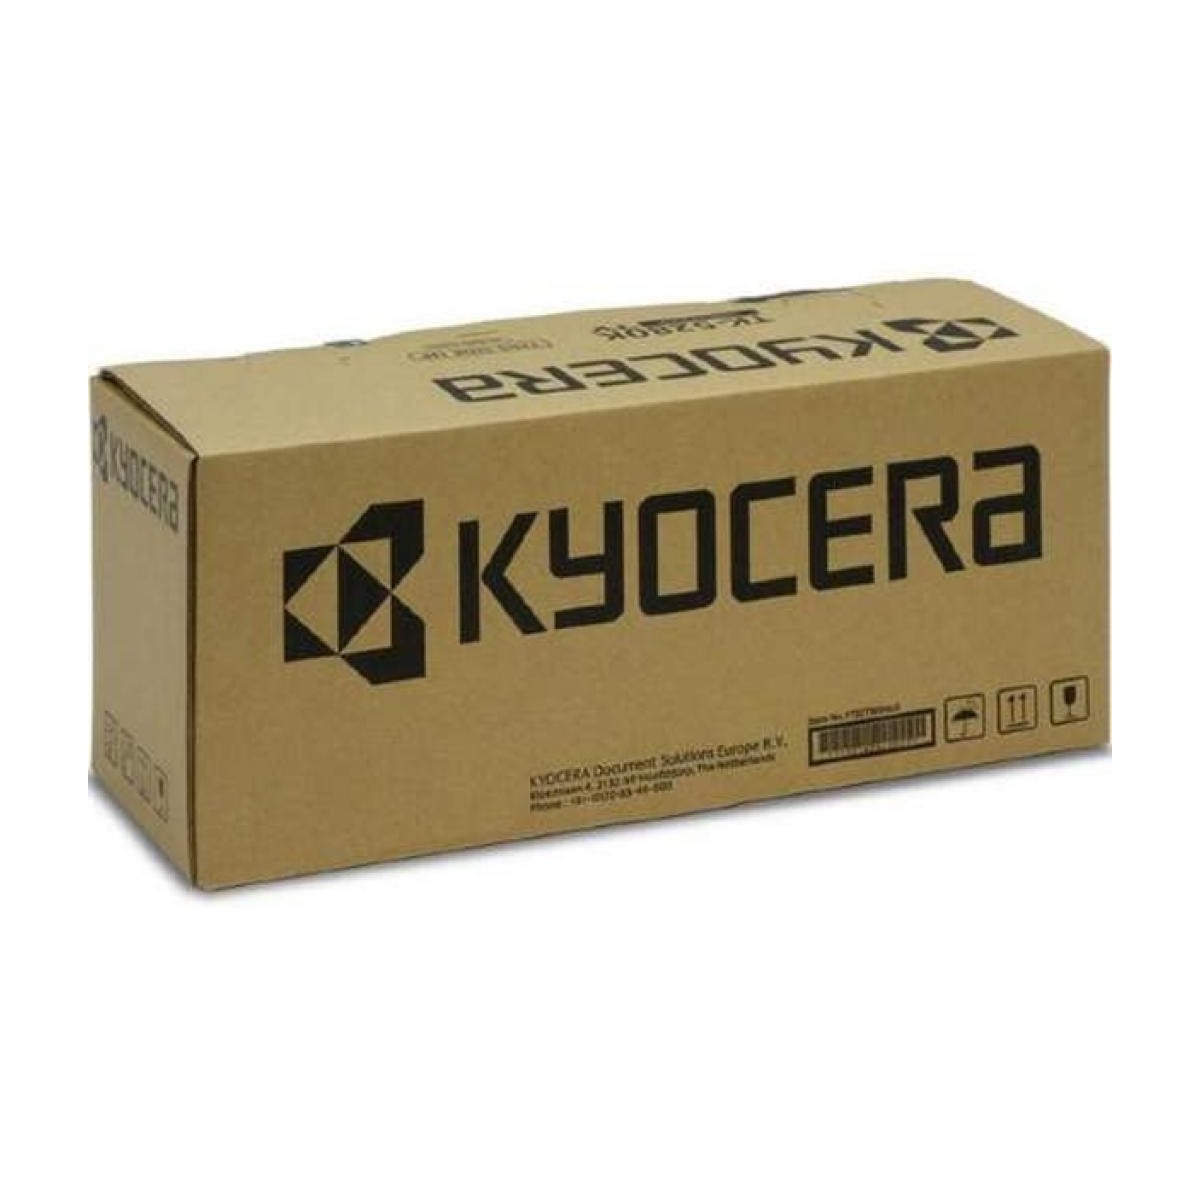 Kyocera FK 3300 - 220 V - Kit für Fixiereinheit - ECOSYS M3655idn M3660idn